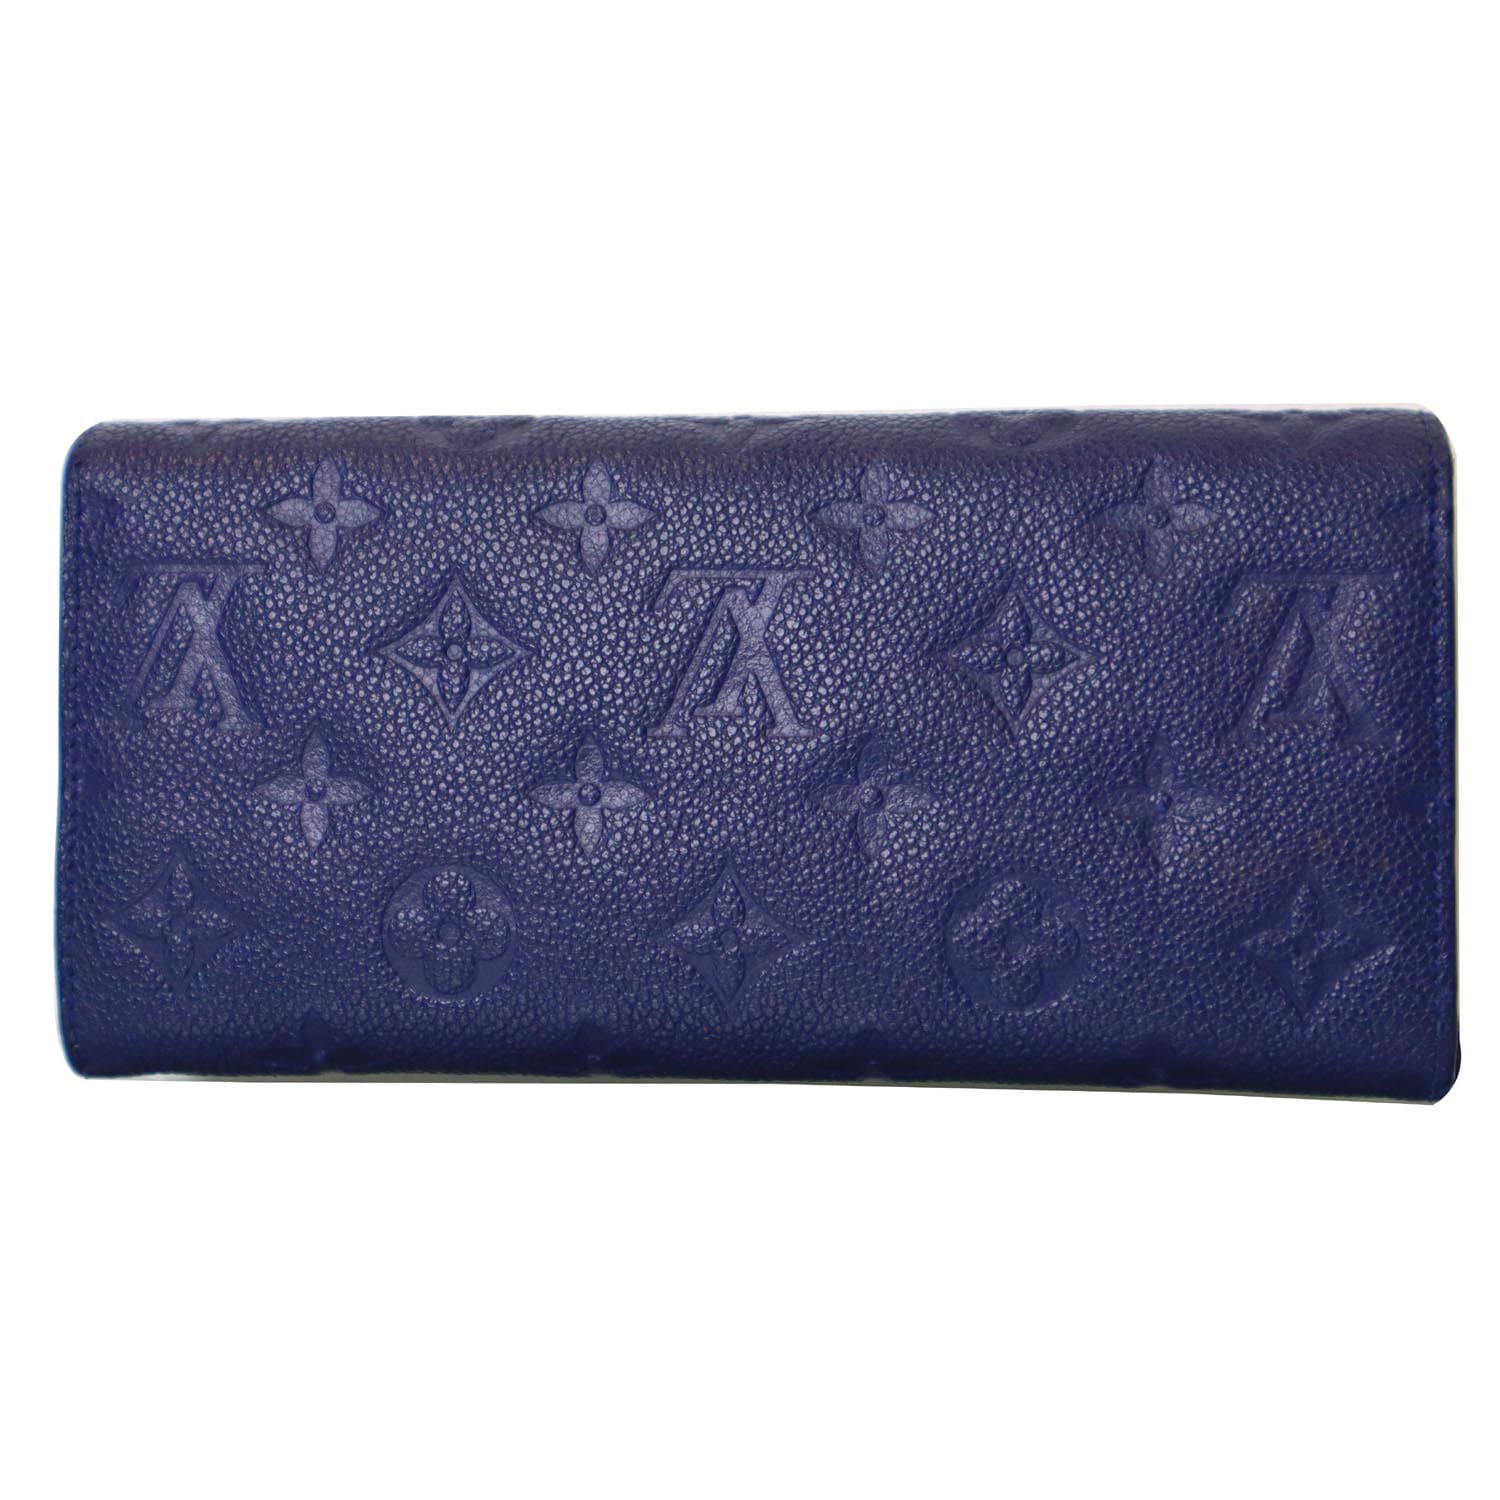 How To Spot a Replica Louis Vuitton Wallet